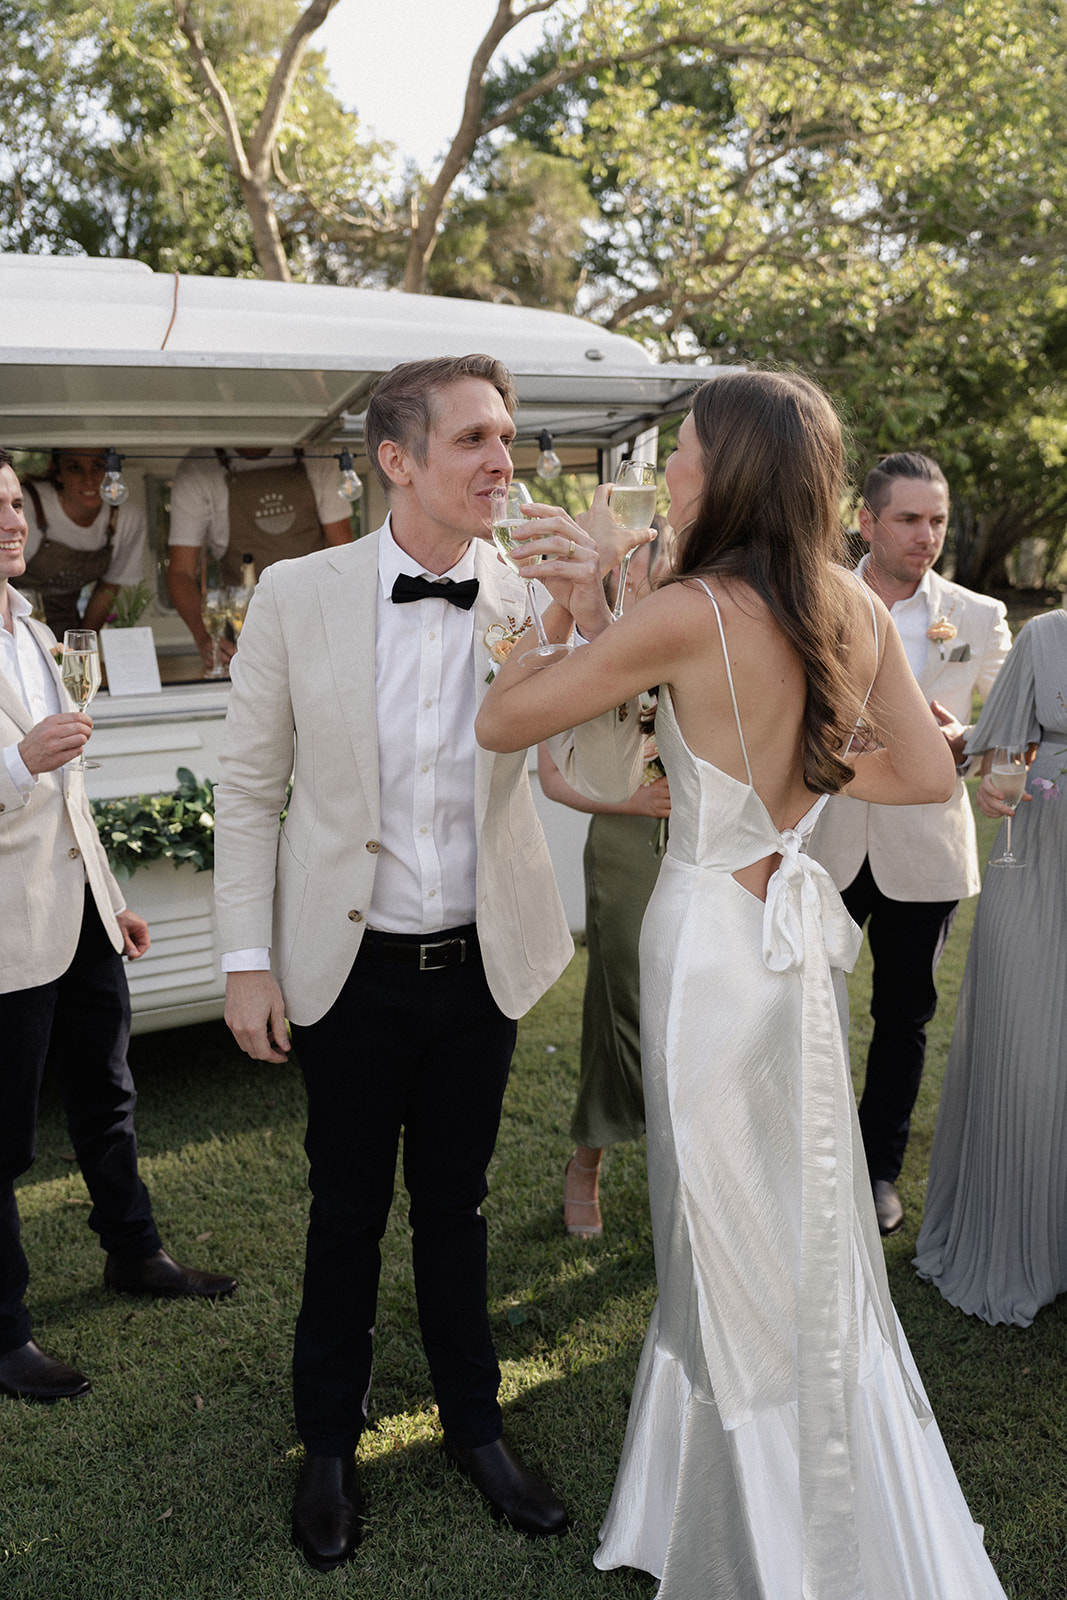 Brisbane editorial backyard wedding photography, candids of Couple 